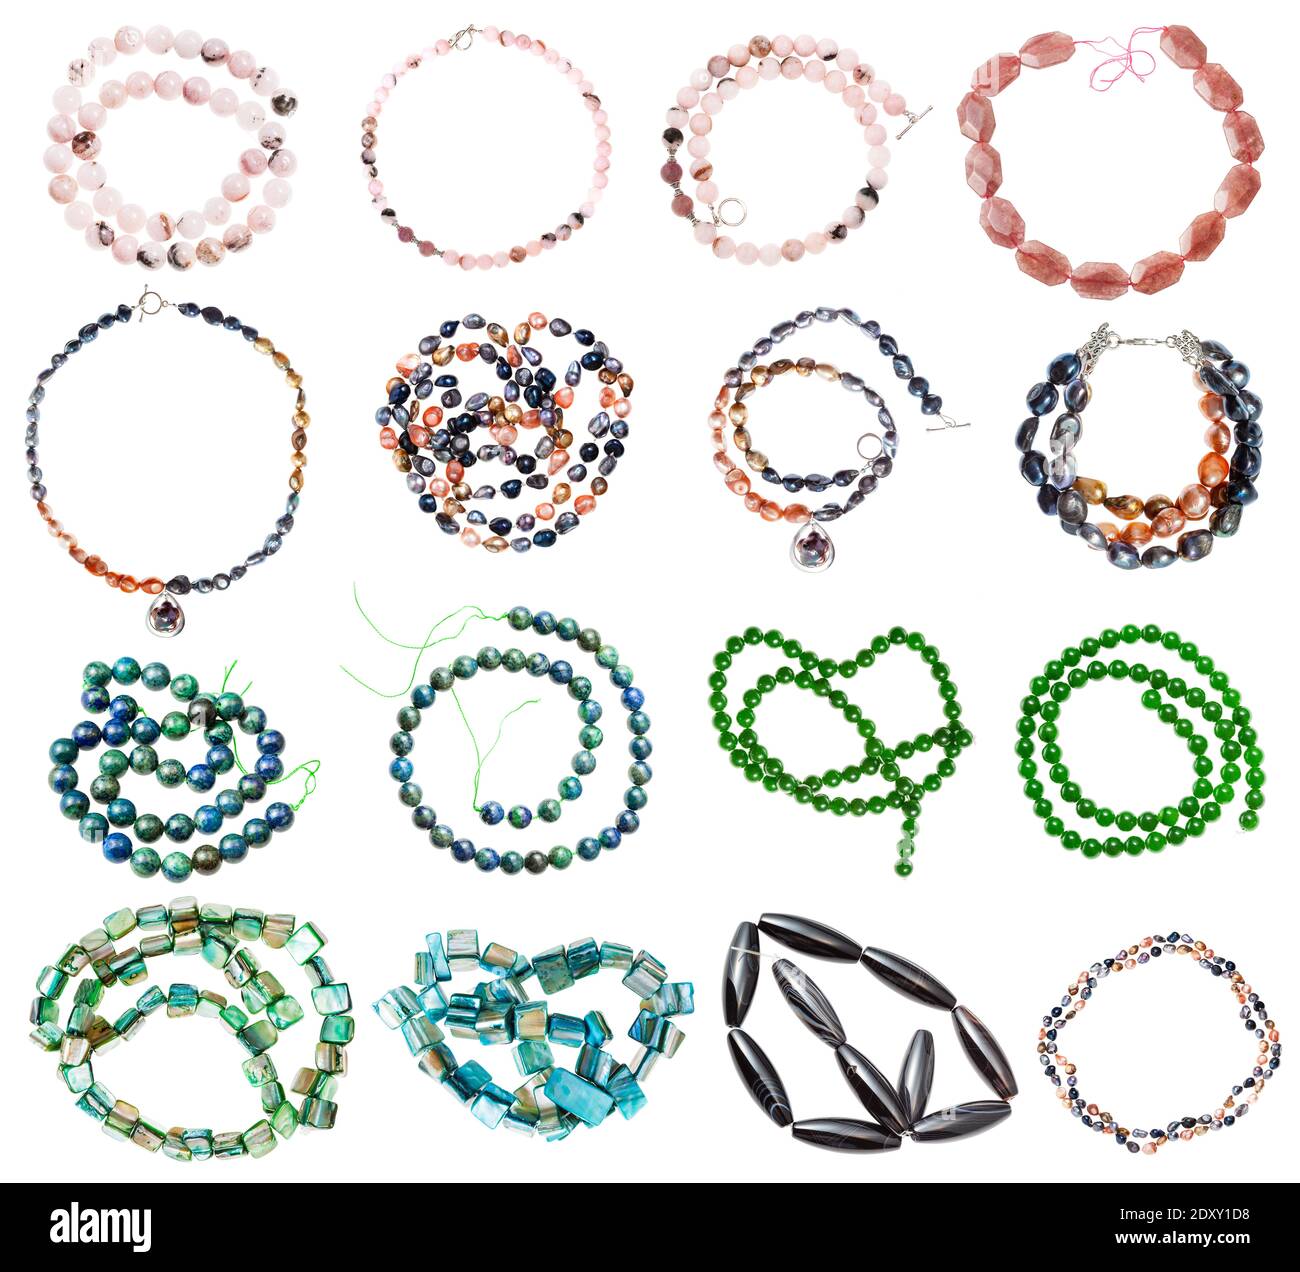 collection of various strings of beads from gemstones (rose quartz, nephrite, jade, nacre, river pearls, aventurine, agate, azurite, malachite) isolat Stock Photo